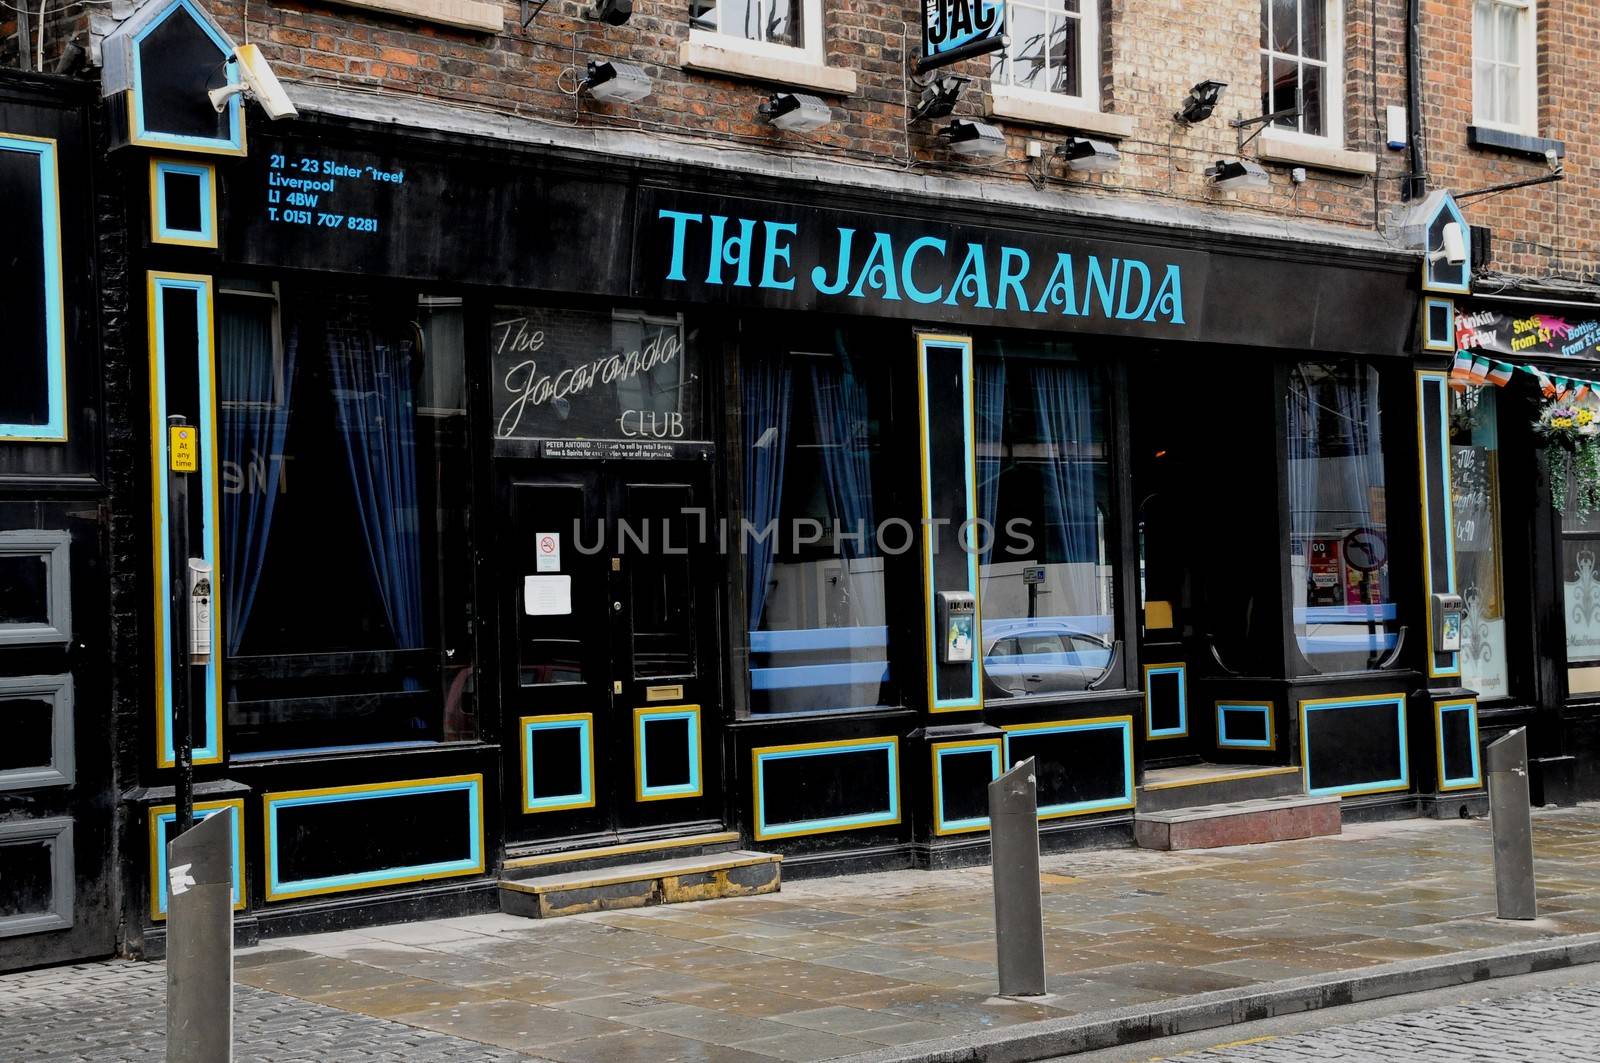 Jacaranda Club,Liverpool, by gorilla